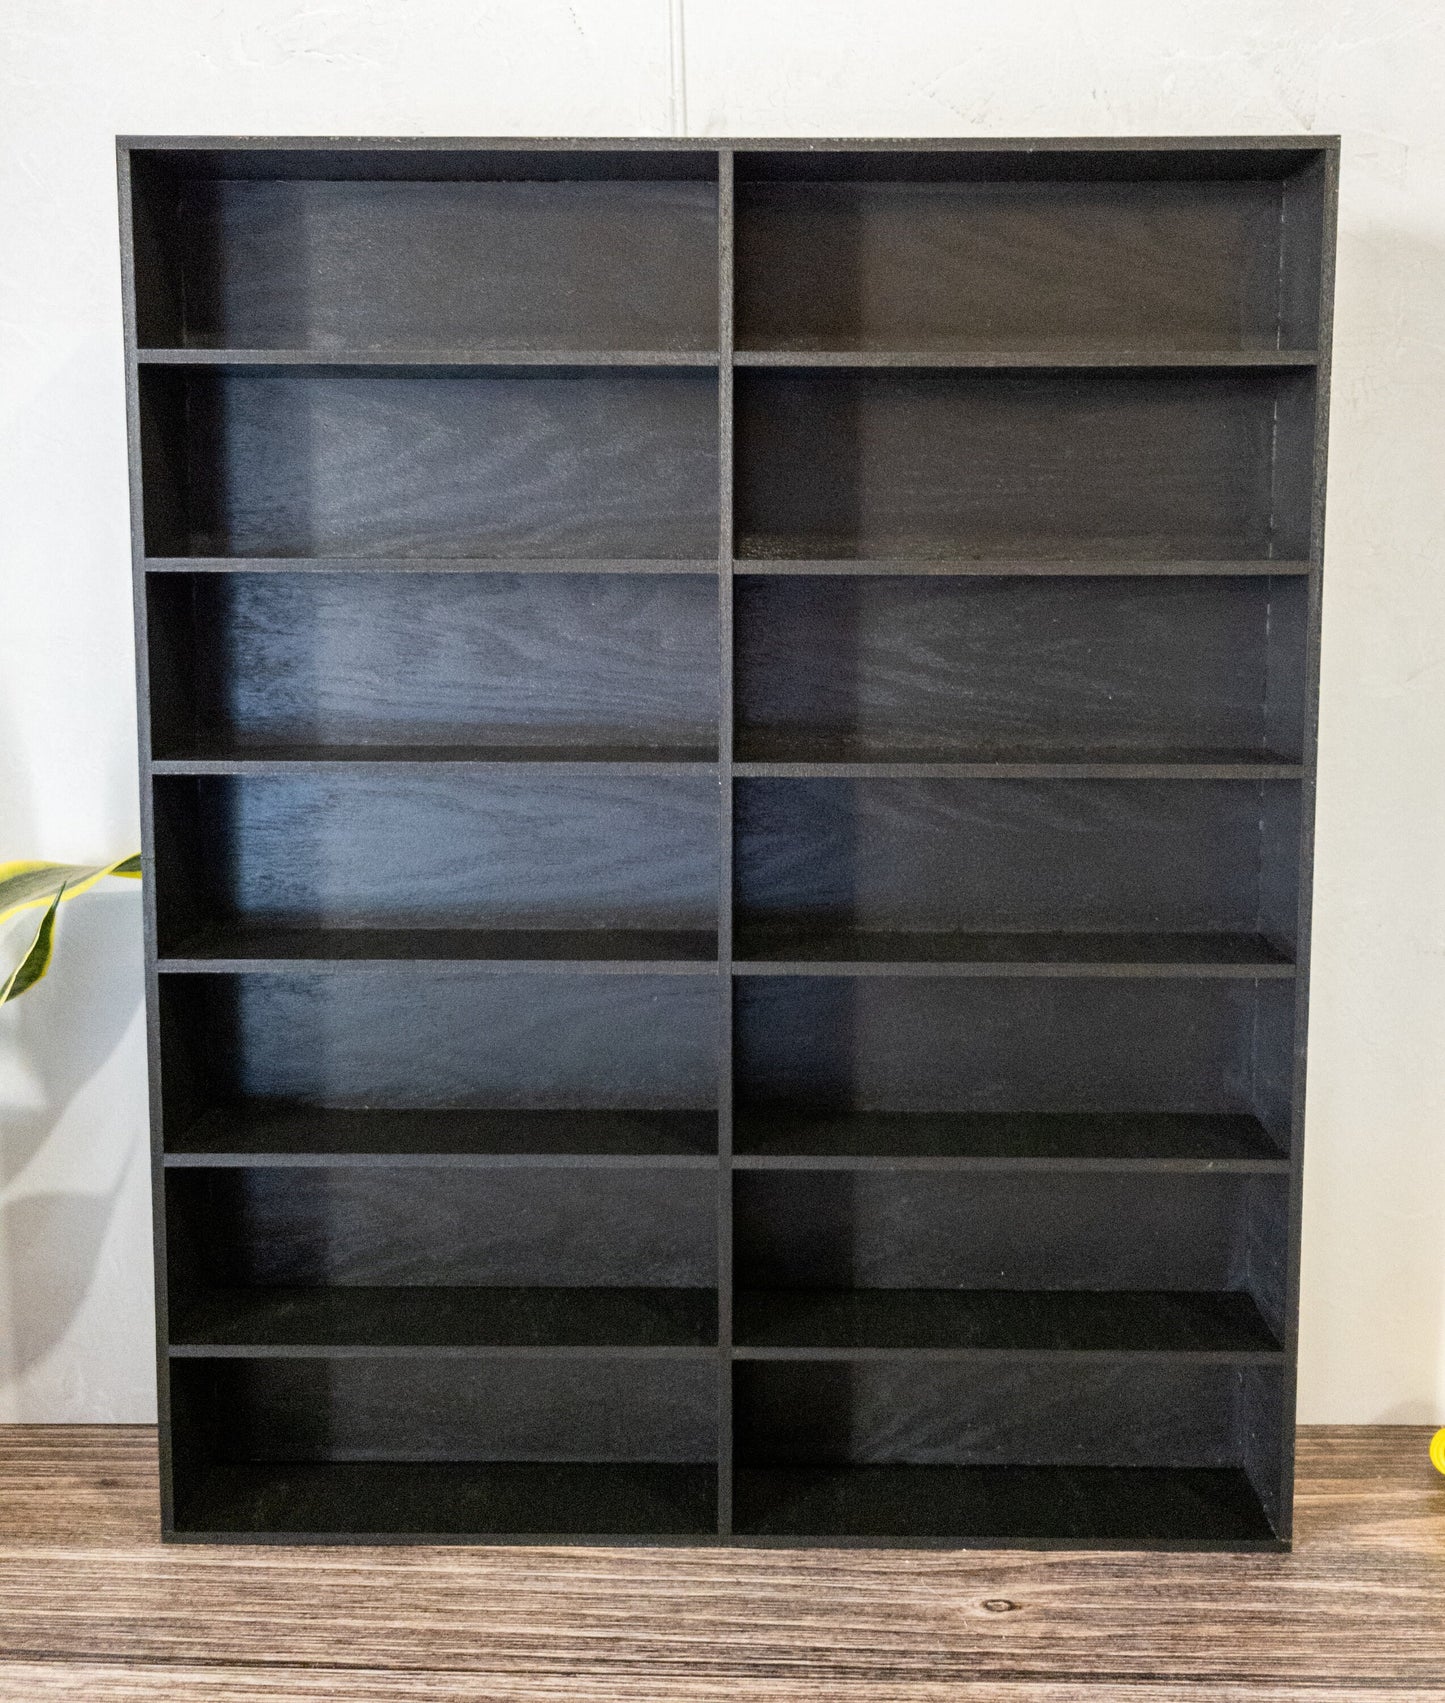 14 Compartment Wooden Display Shelf - Trinket Shelf - Curio Cabinet- Knick Knack Collection Display - Printer Tray -Figure Organizer Display